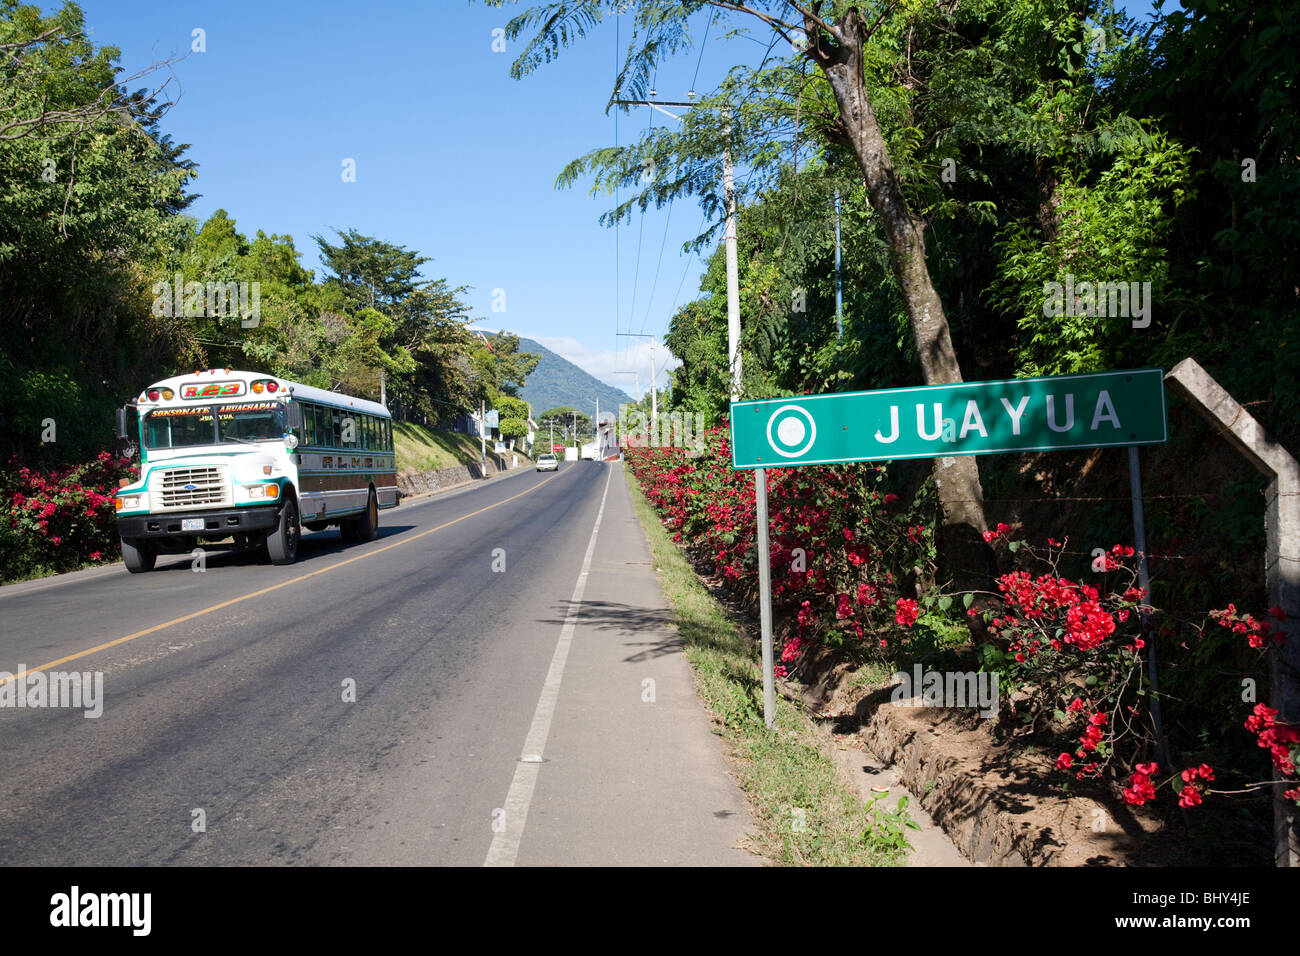 Juayua, Ruta de las Flores, El Salvador Stock Photo